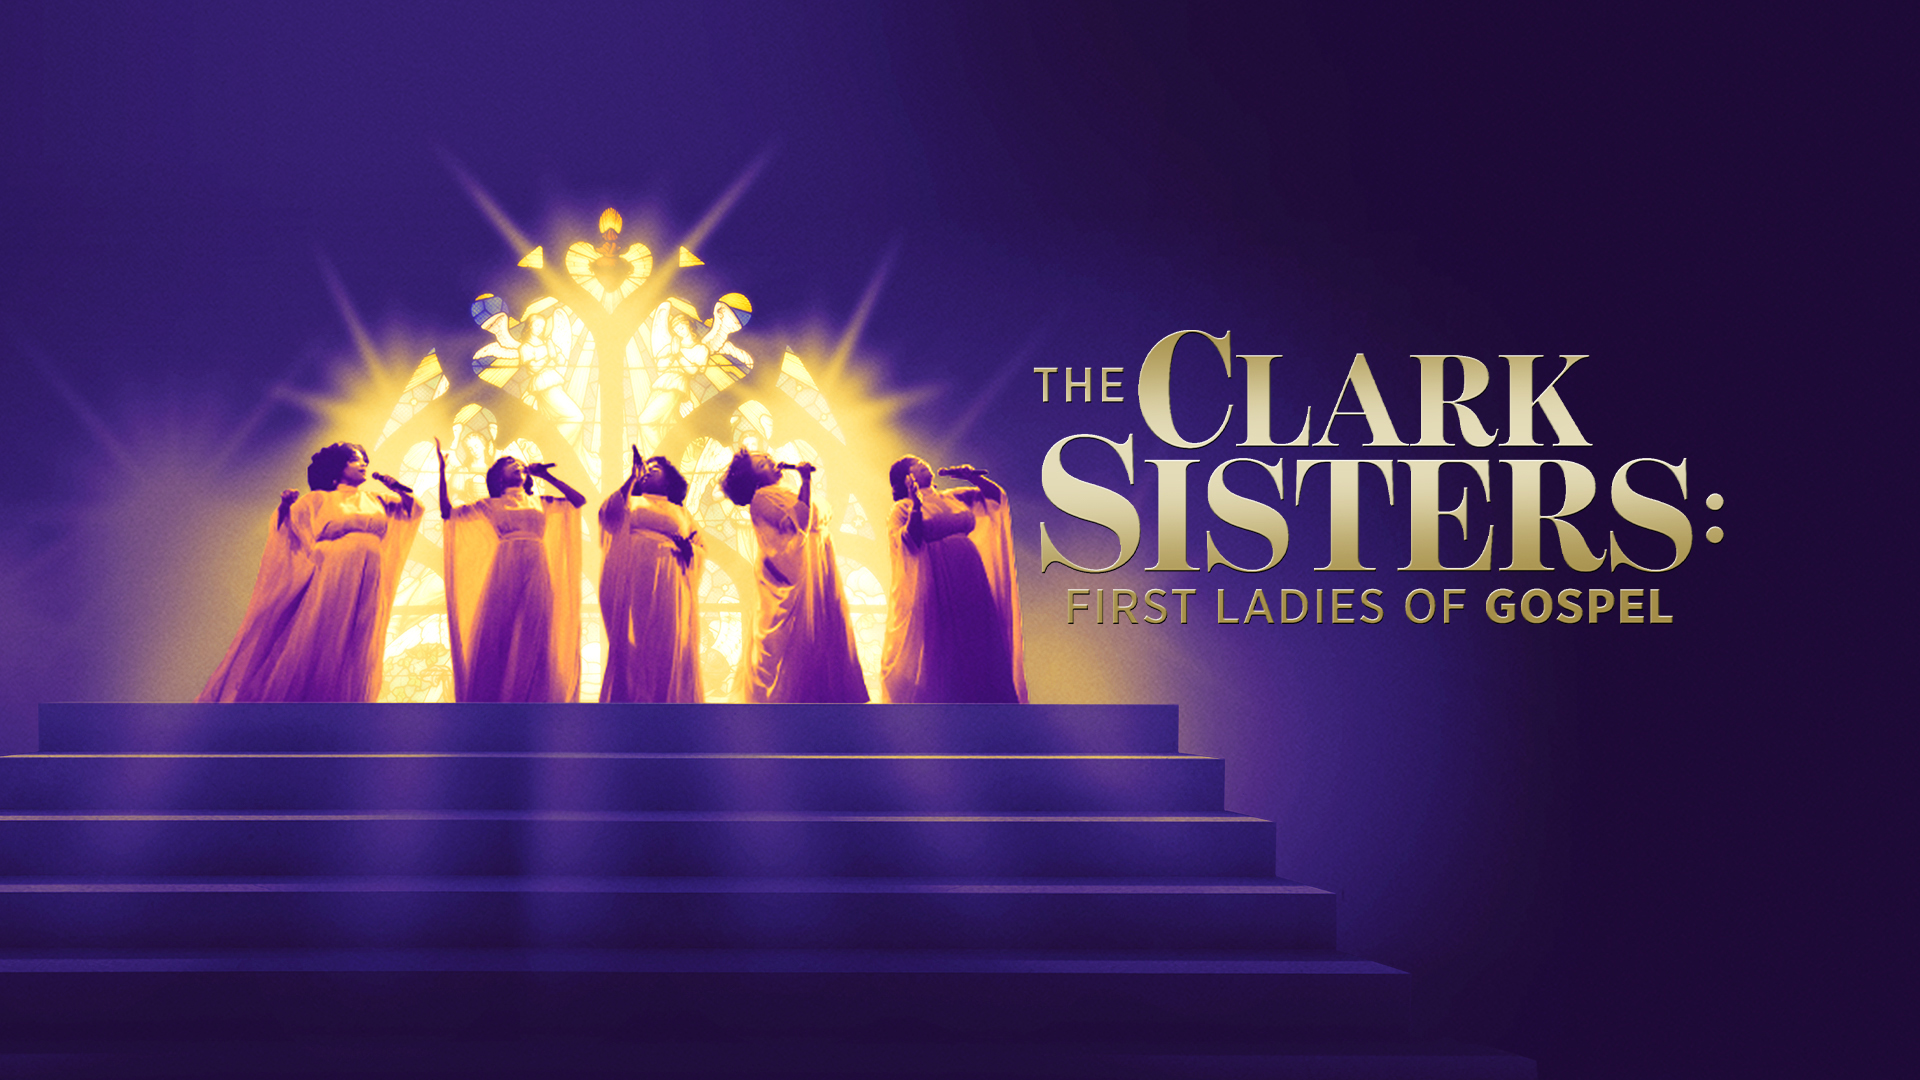 Clark Sisters Biopic Soundtrack Debuts at No. 8 on Billboard Top Gospel Albums Chart